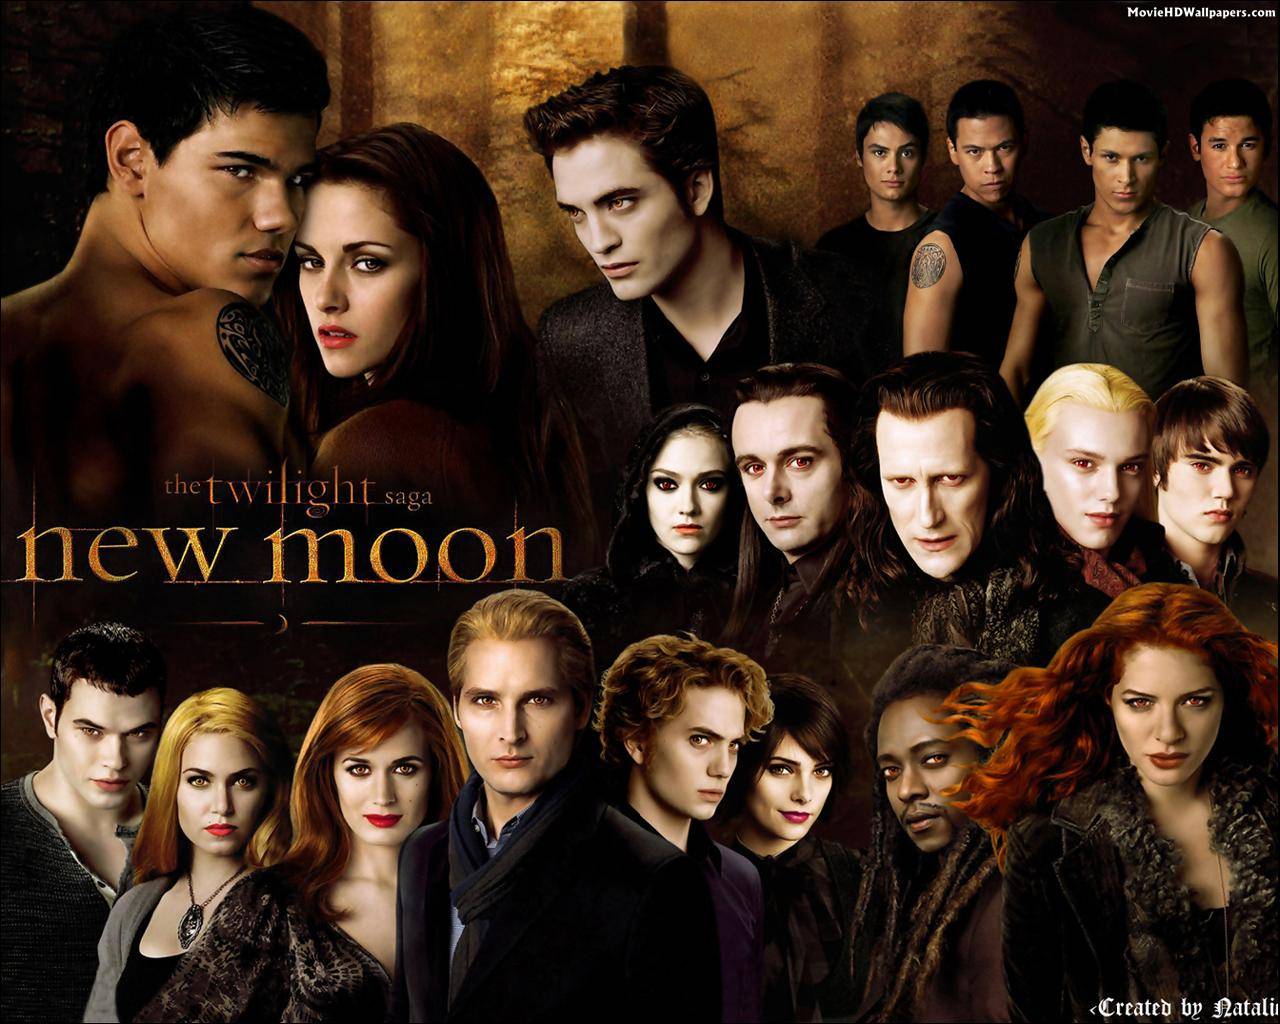 High Resolution Wallpaper | The Twilight Saga: New Moon 1280x1024 px